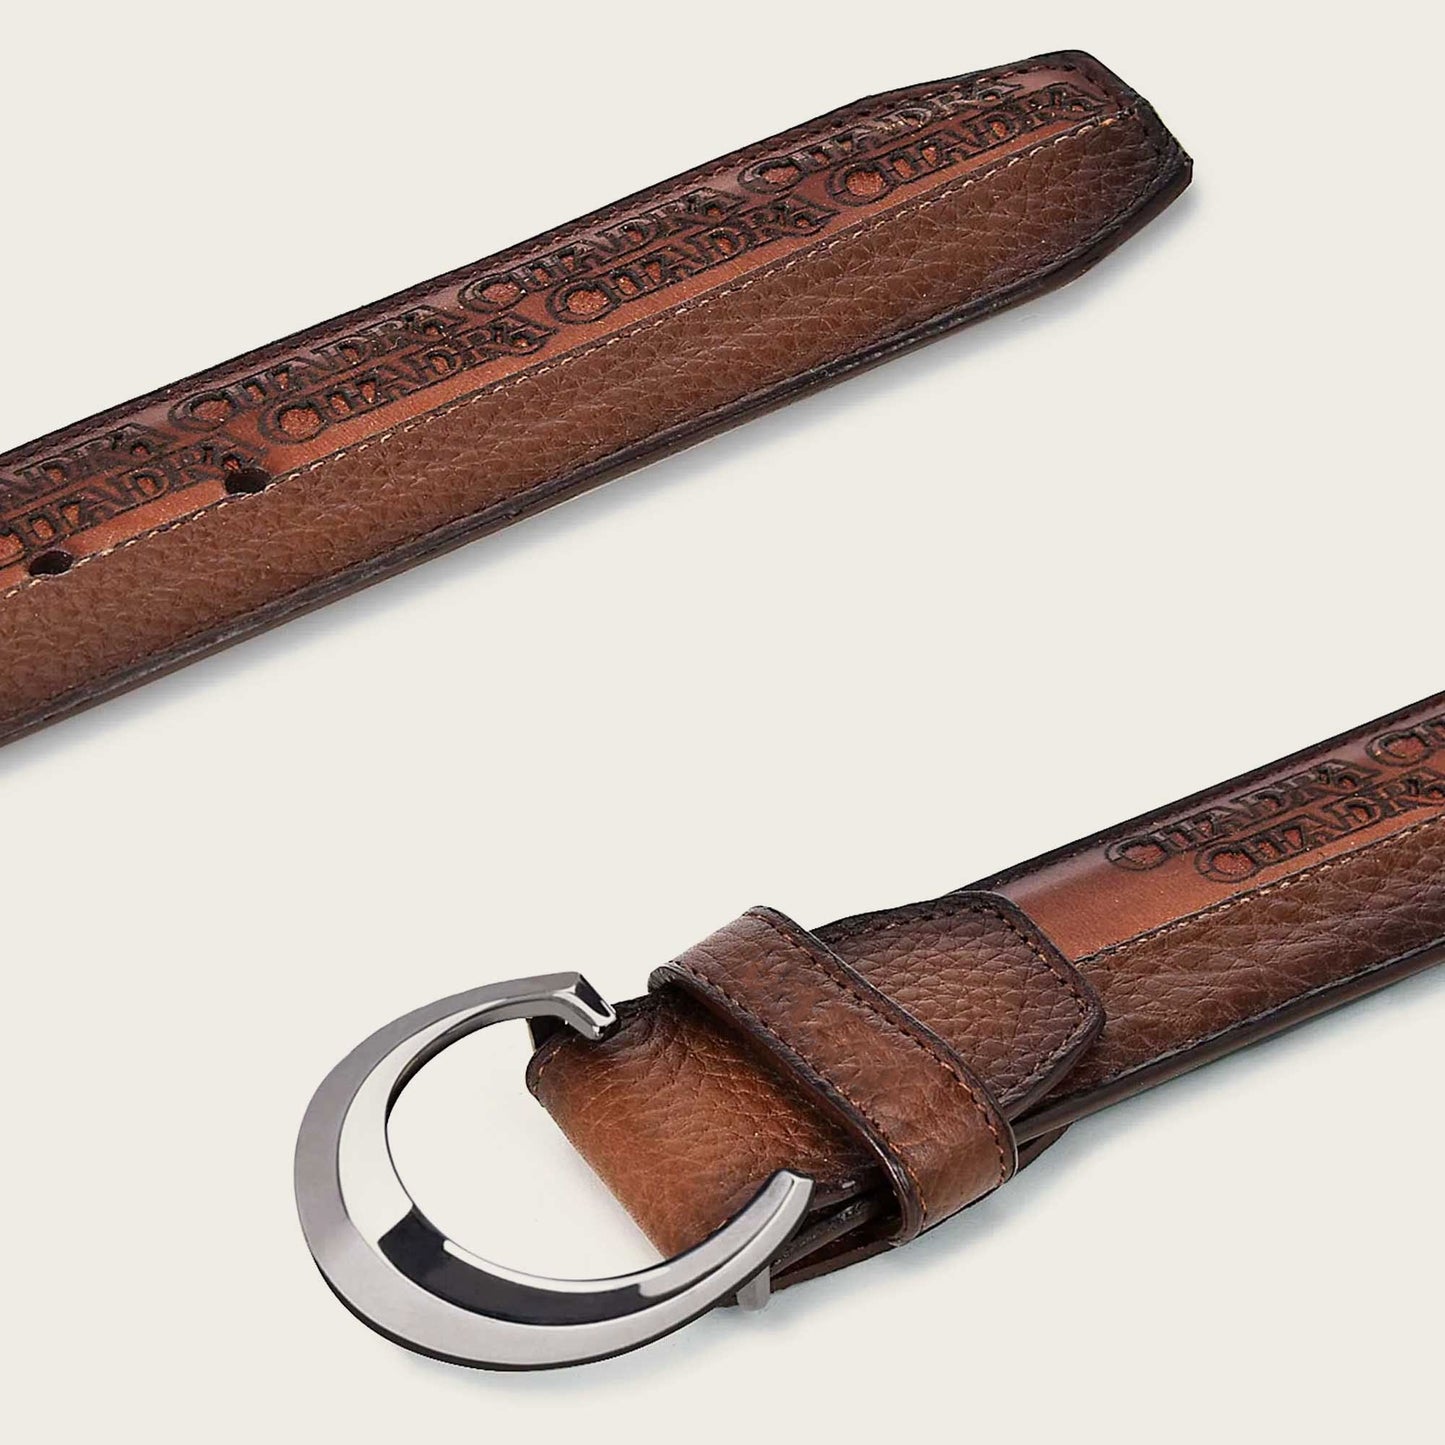 Engraved honey urban leather belt